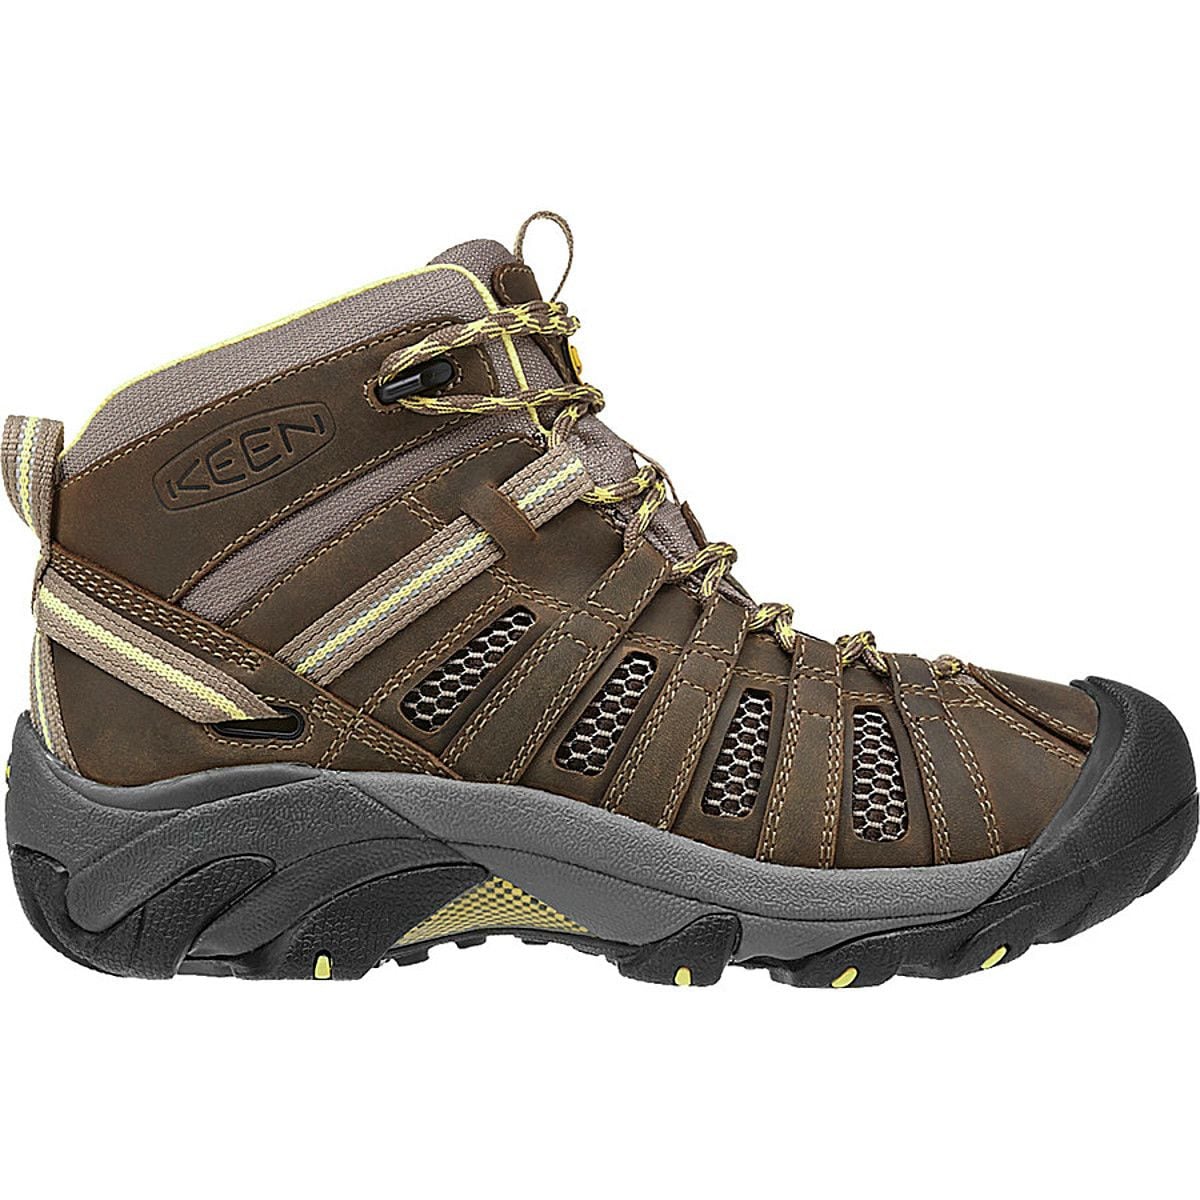 Keen Voyageur Mid Hiking Boot Women'S | eBay